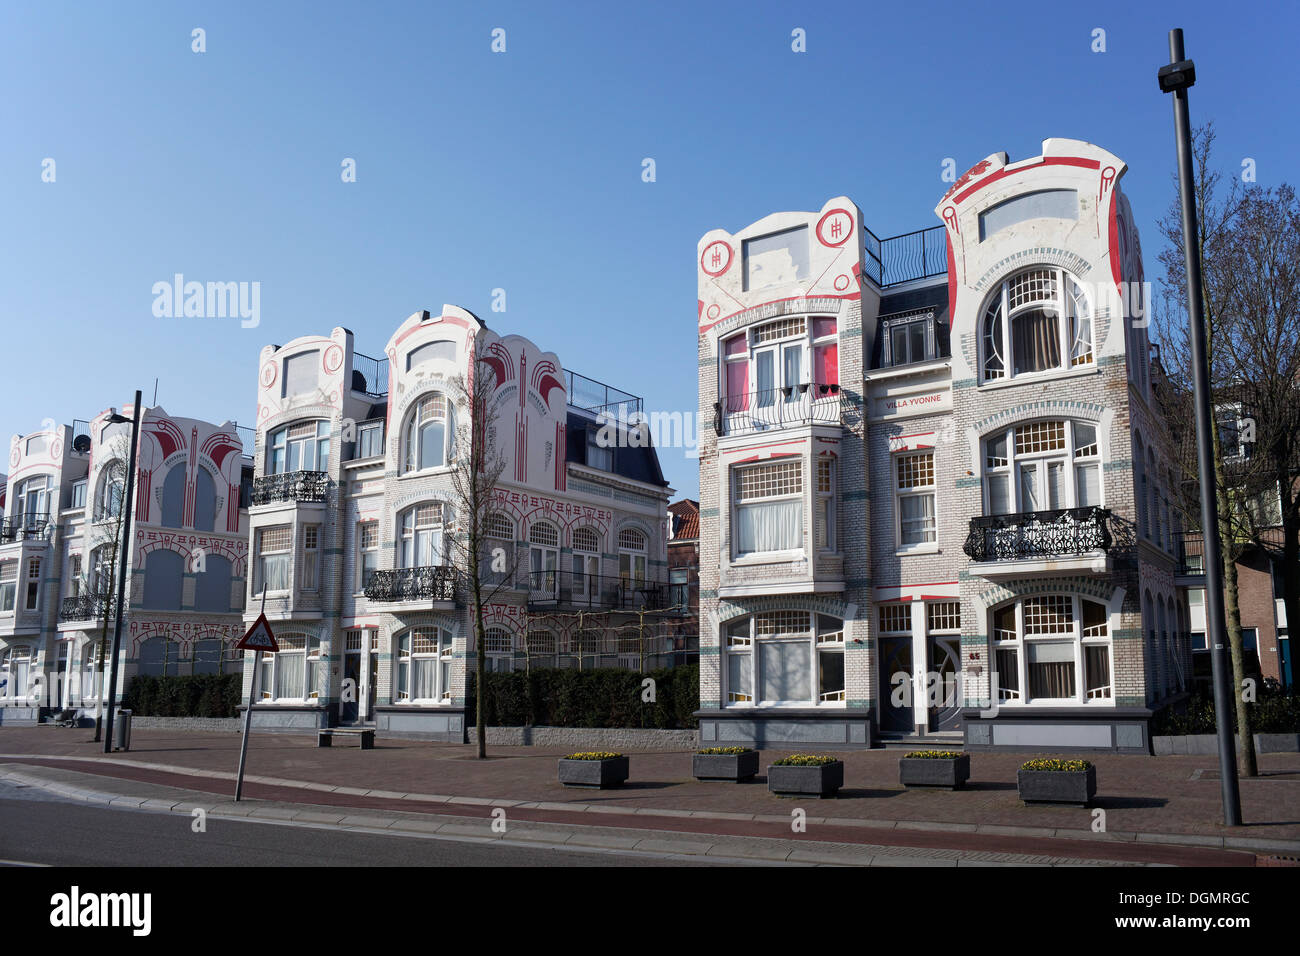 Le ville costruite in stile Art Nouveau, spedizione belga piloti appartamenti da 1910, Walcheren, Vlissingen, Walcheren Foto Stock